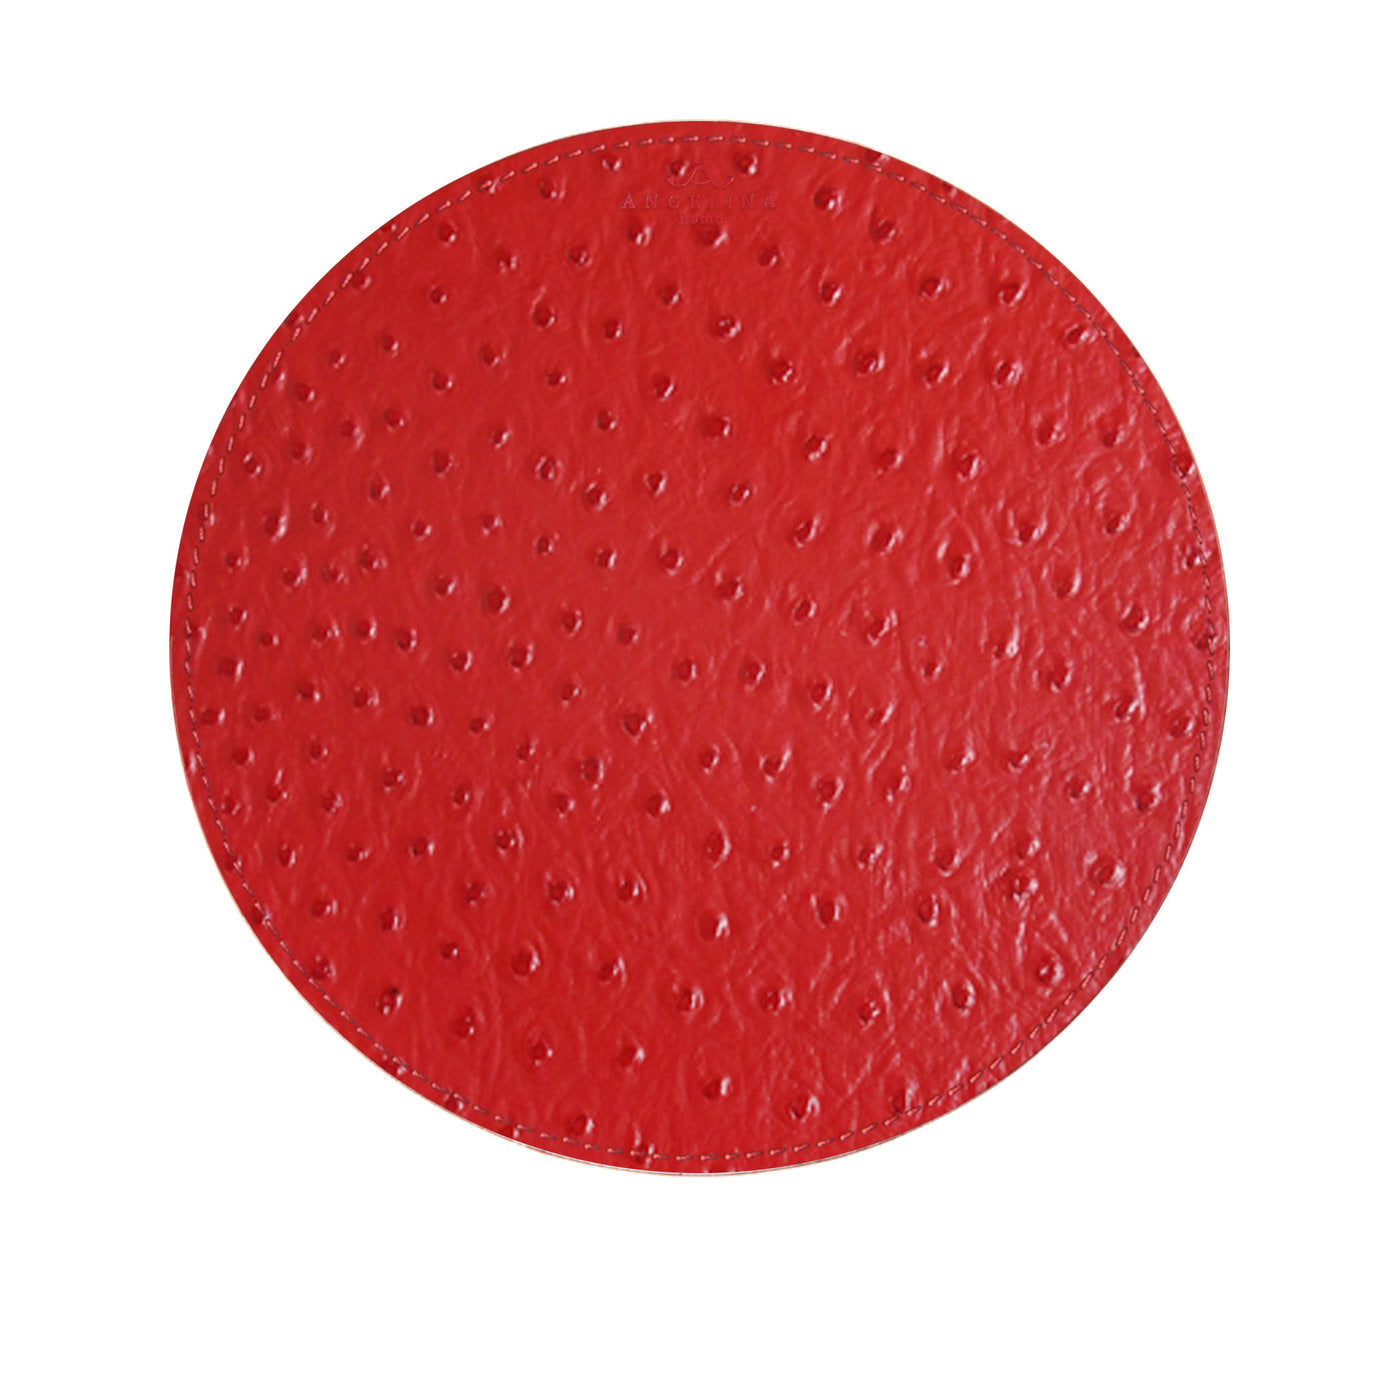 Kenya Medium Set of 2 Round Red Leather Placemats - Alternative view 1